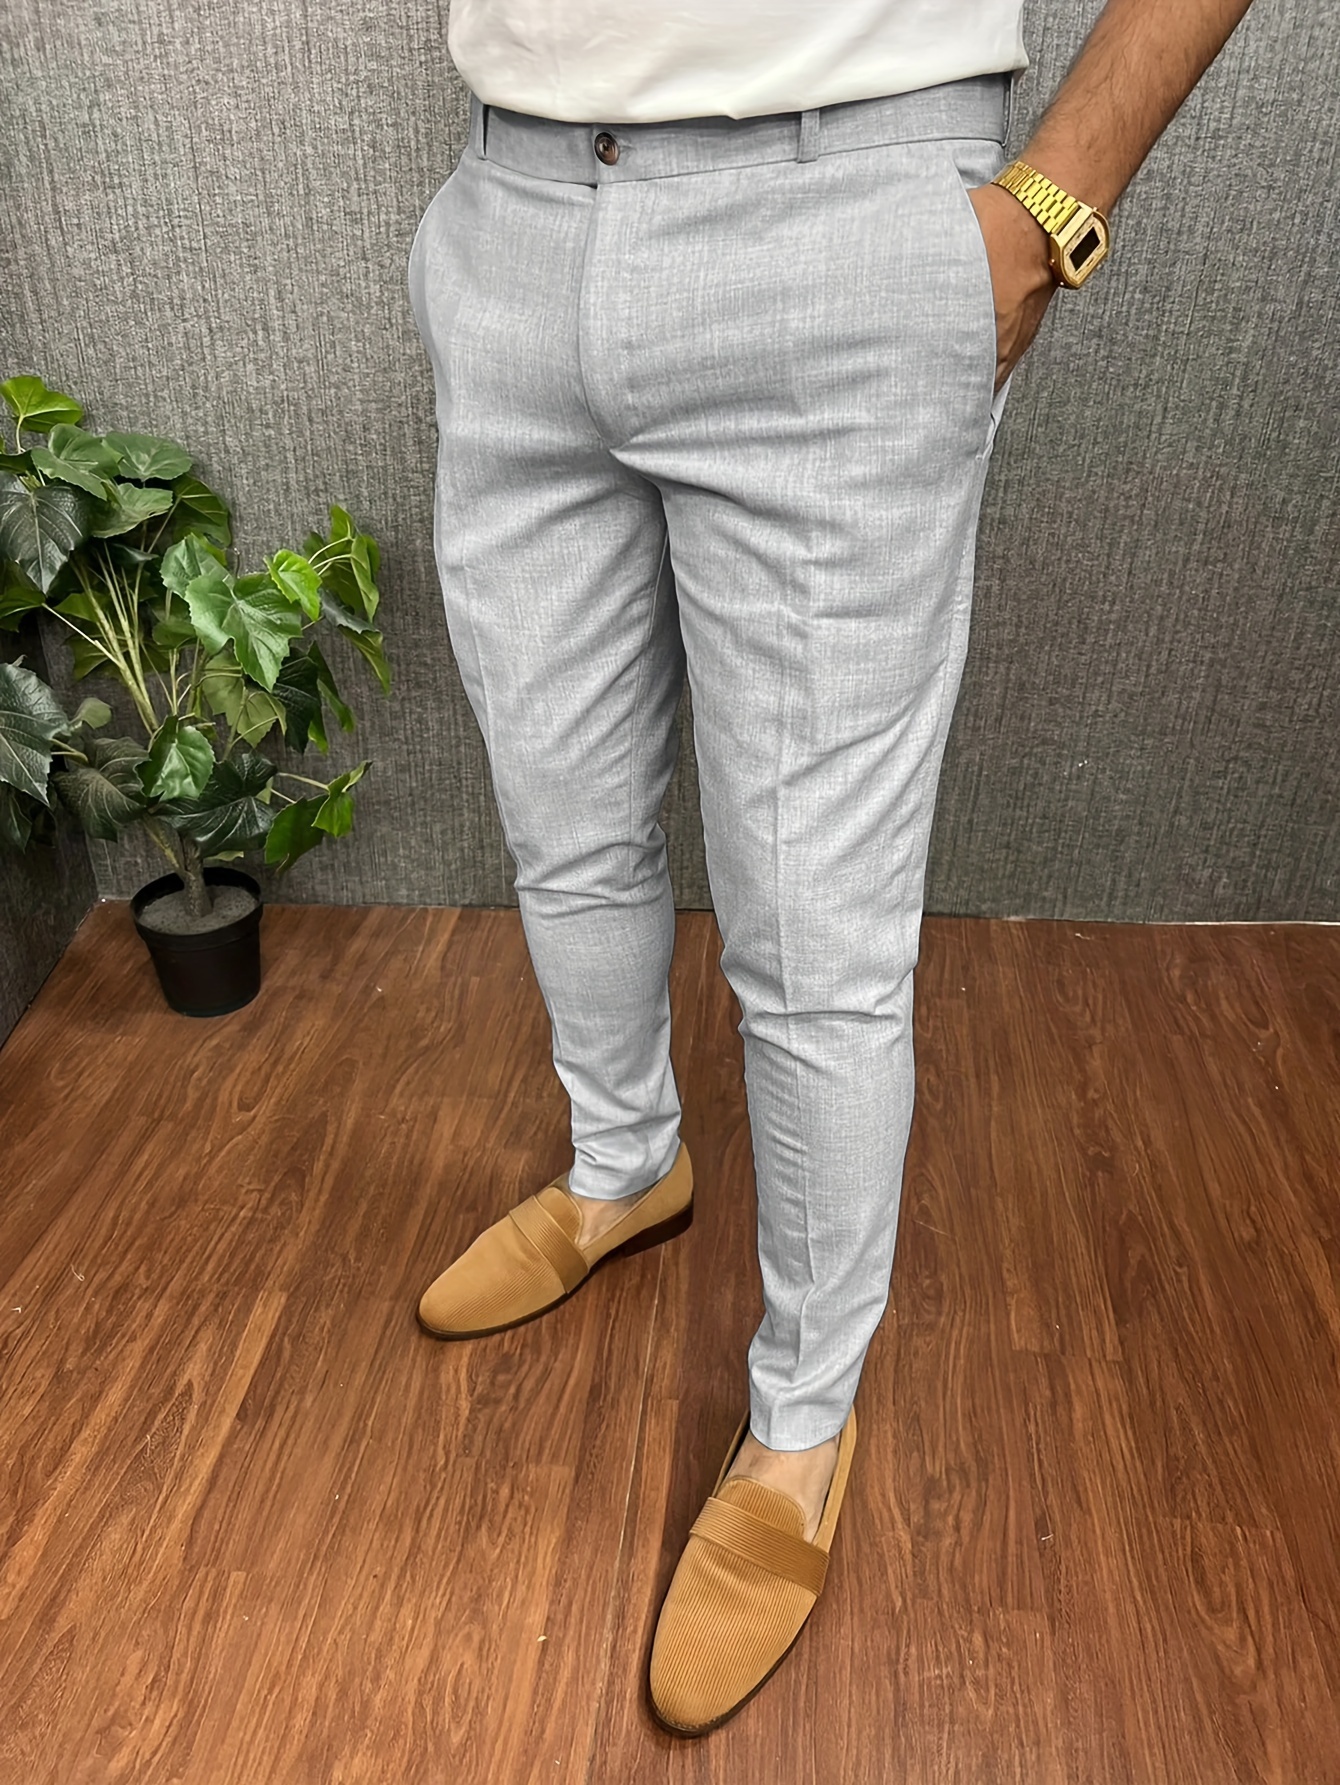 Men's Elegant Slacks, Semi-formal Dress Pants For Business Banquet